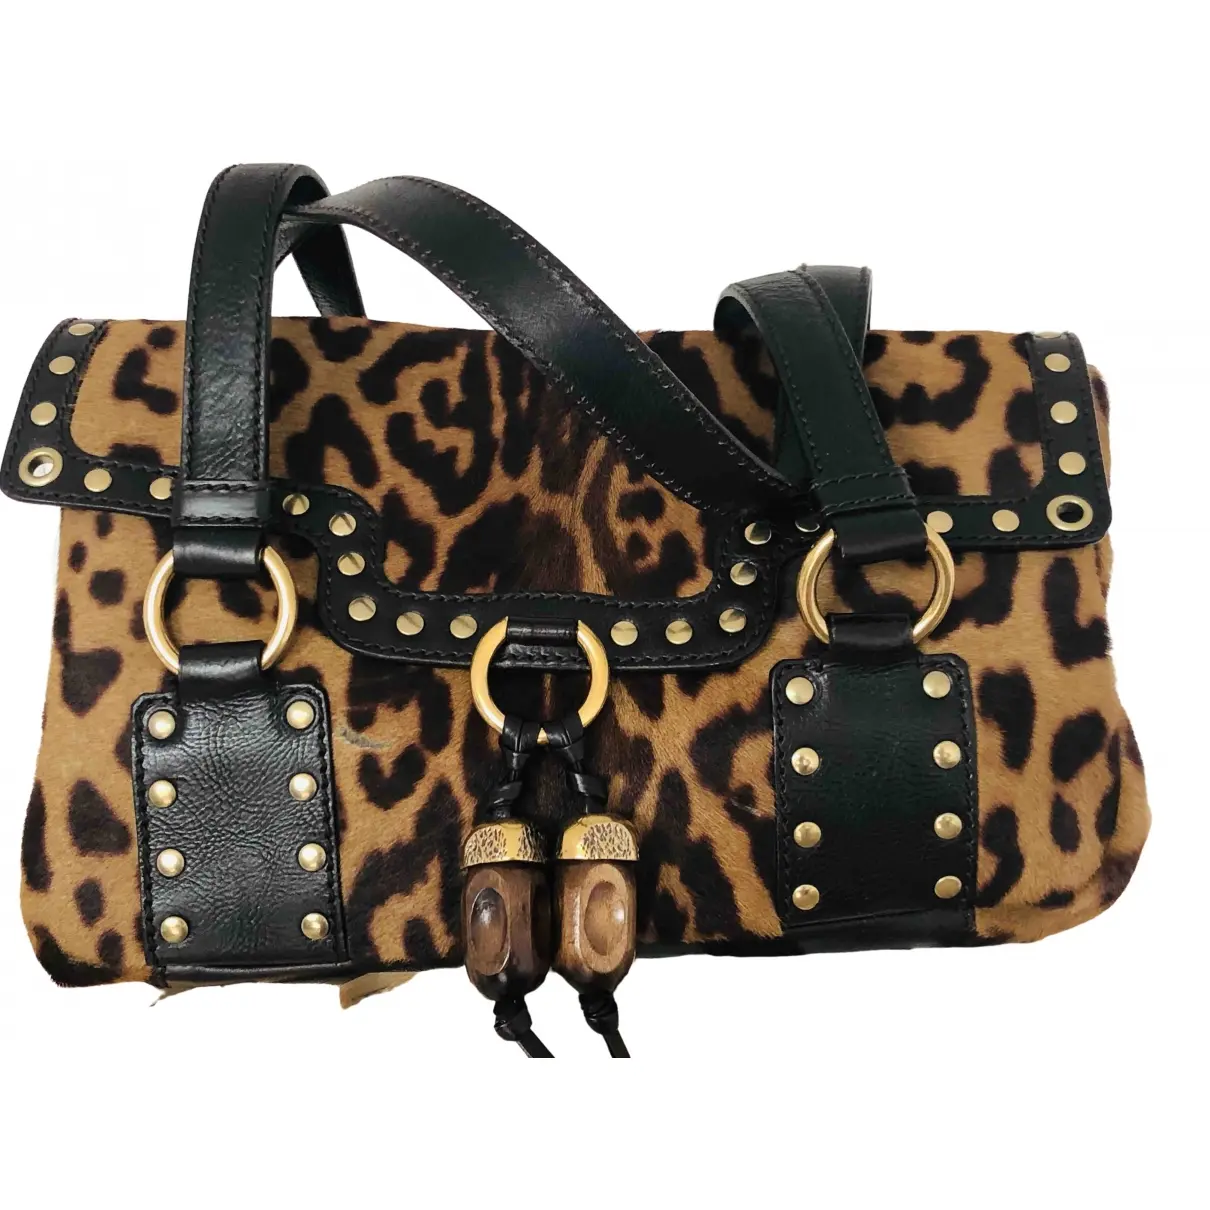 Pony-style calfskin handbag Yves Saint Laurent